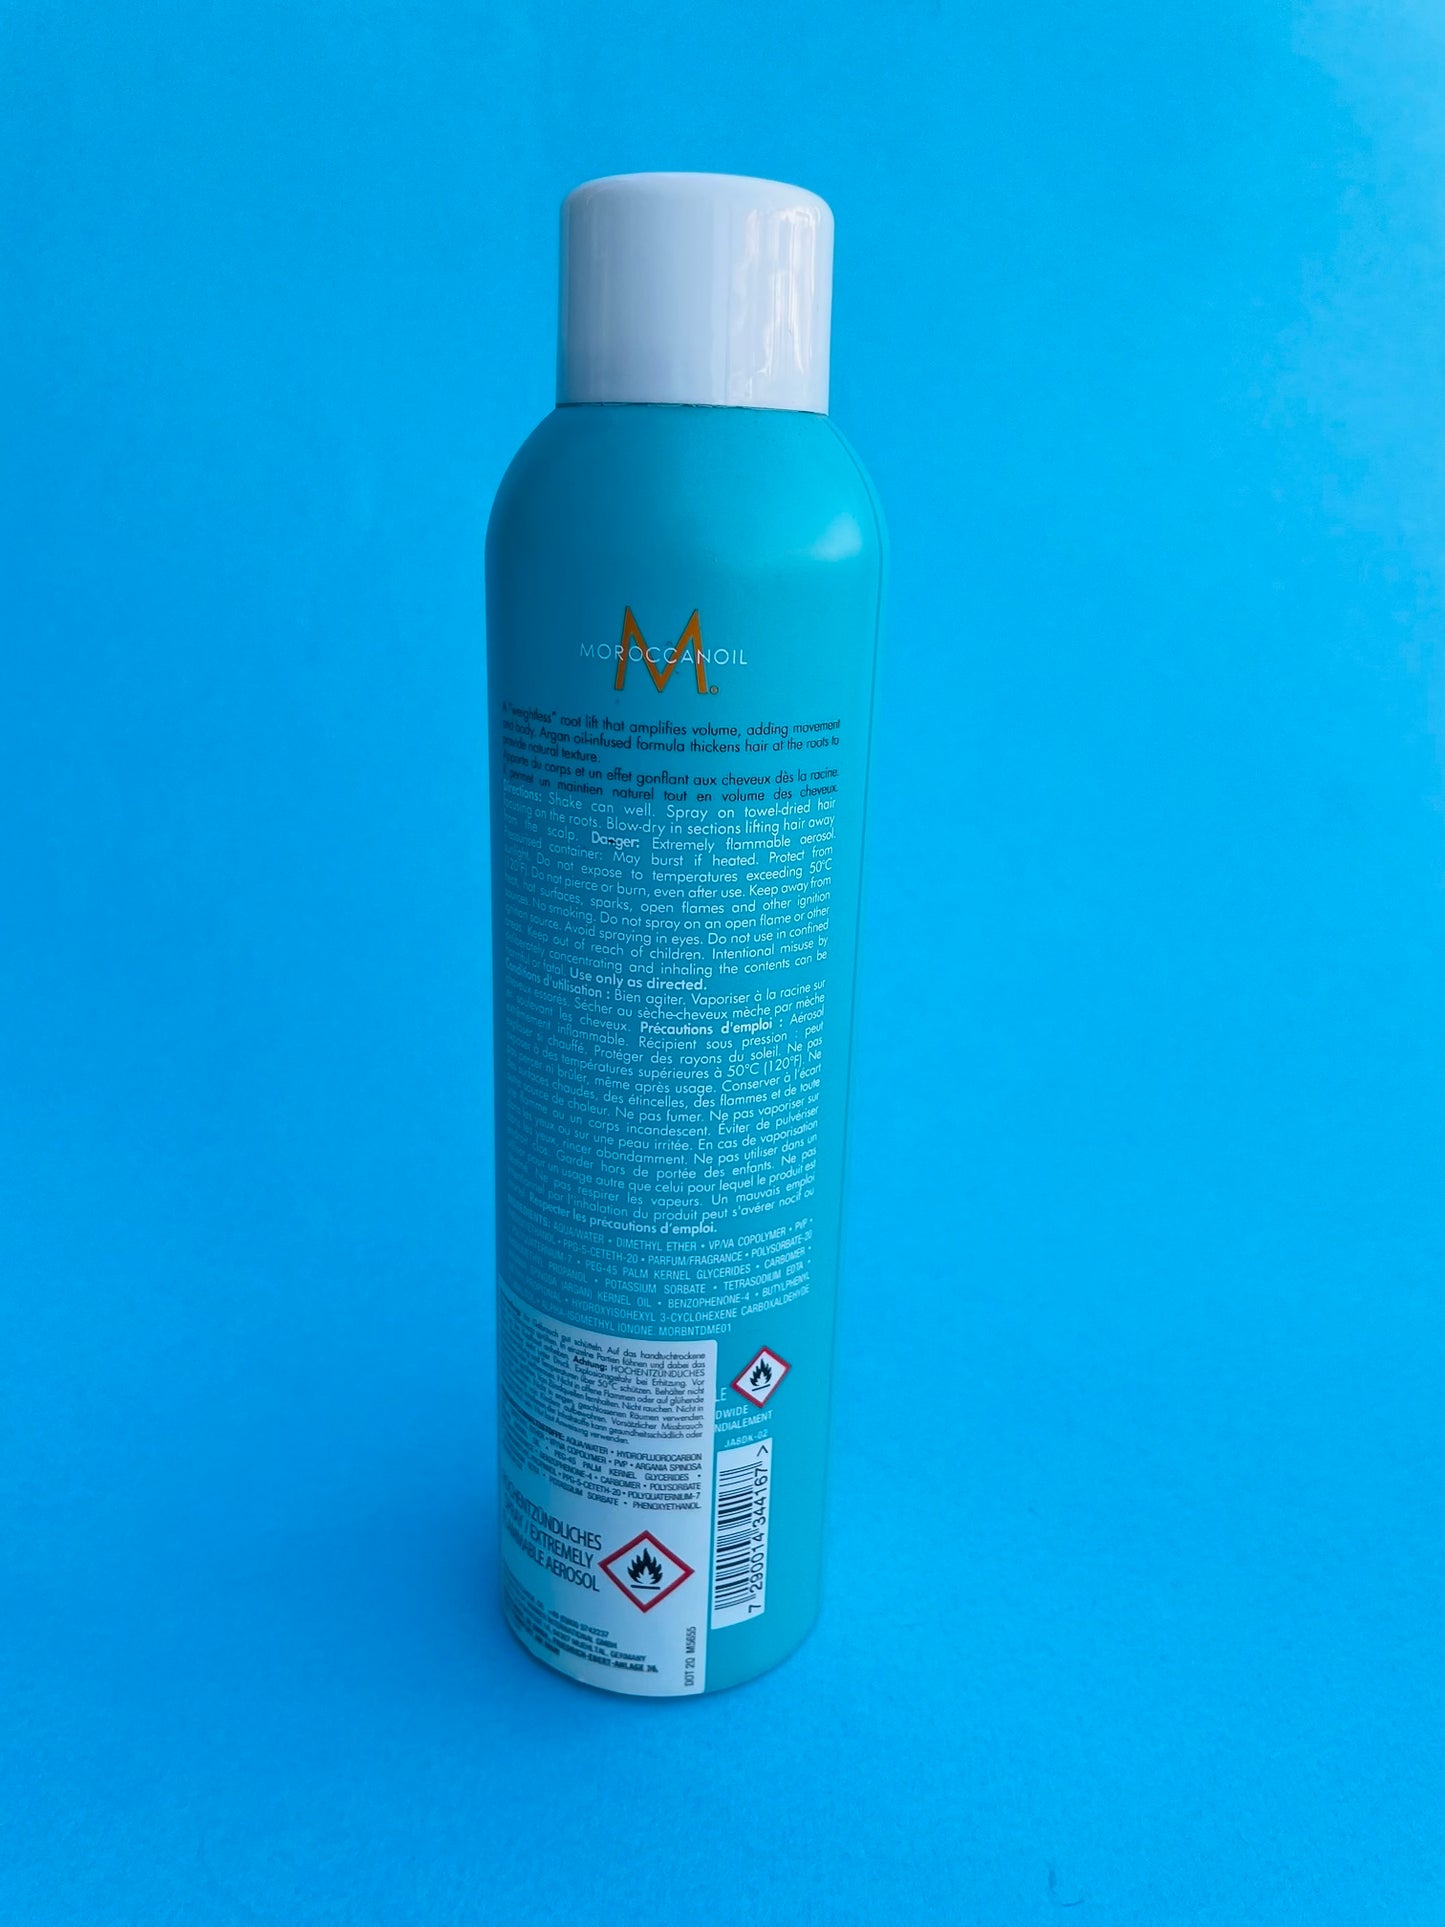 Moroccanoil hair volume spray